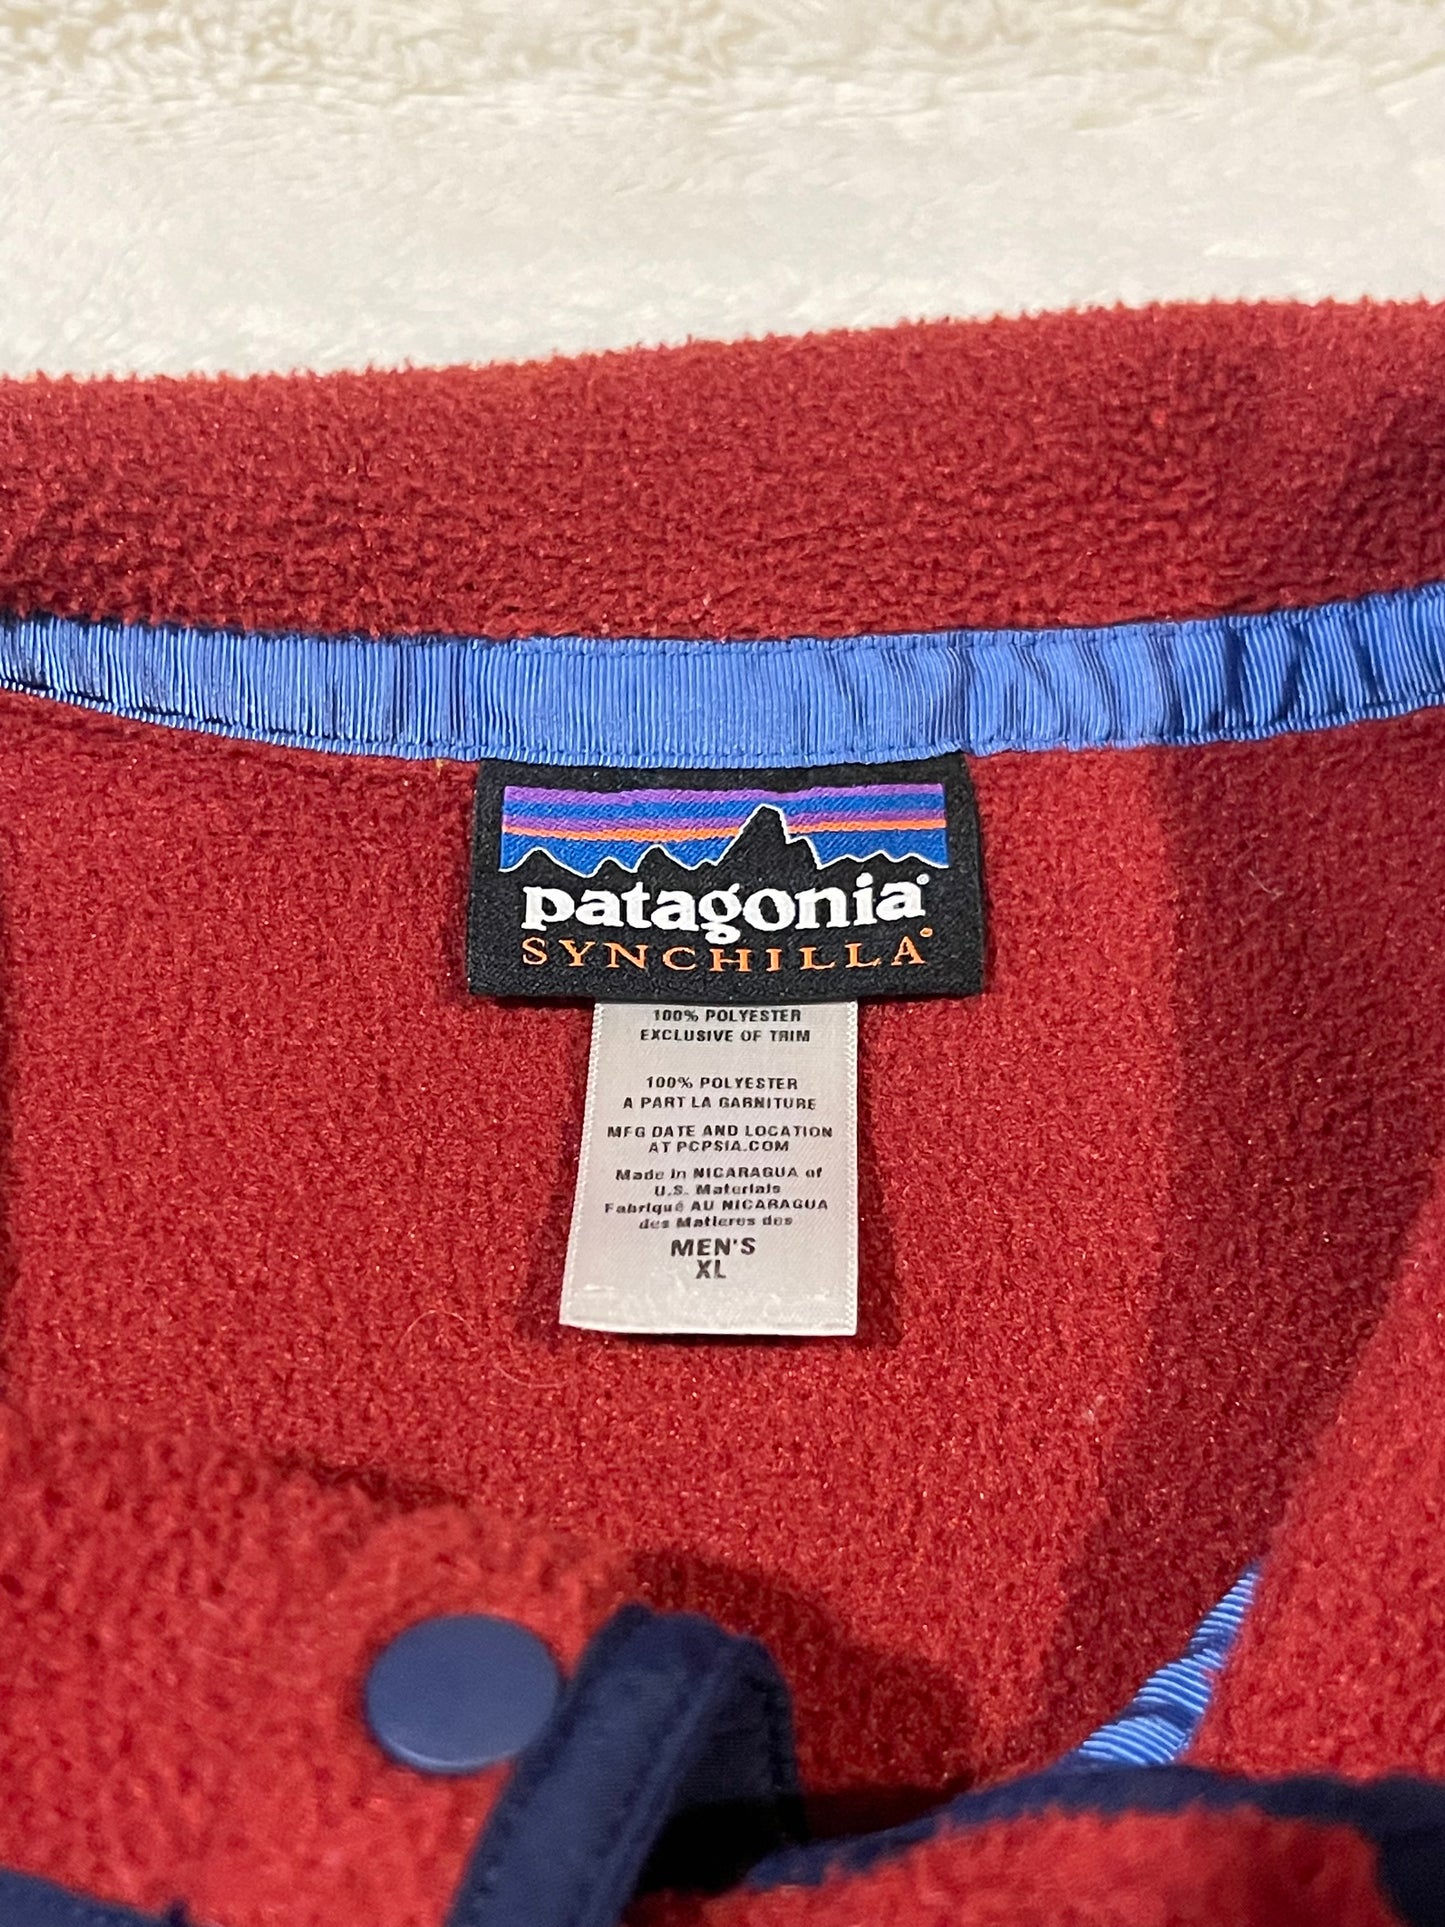 Patagonia Synchilla Fleece (XL)